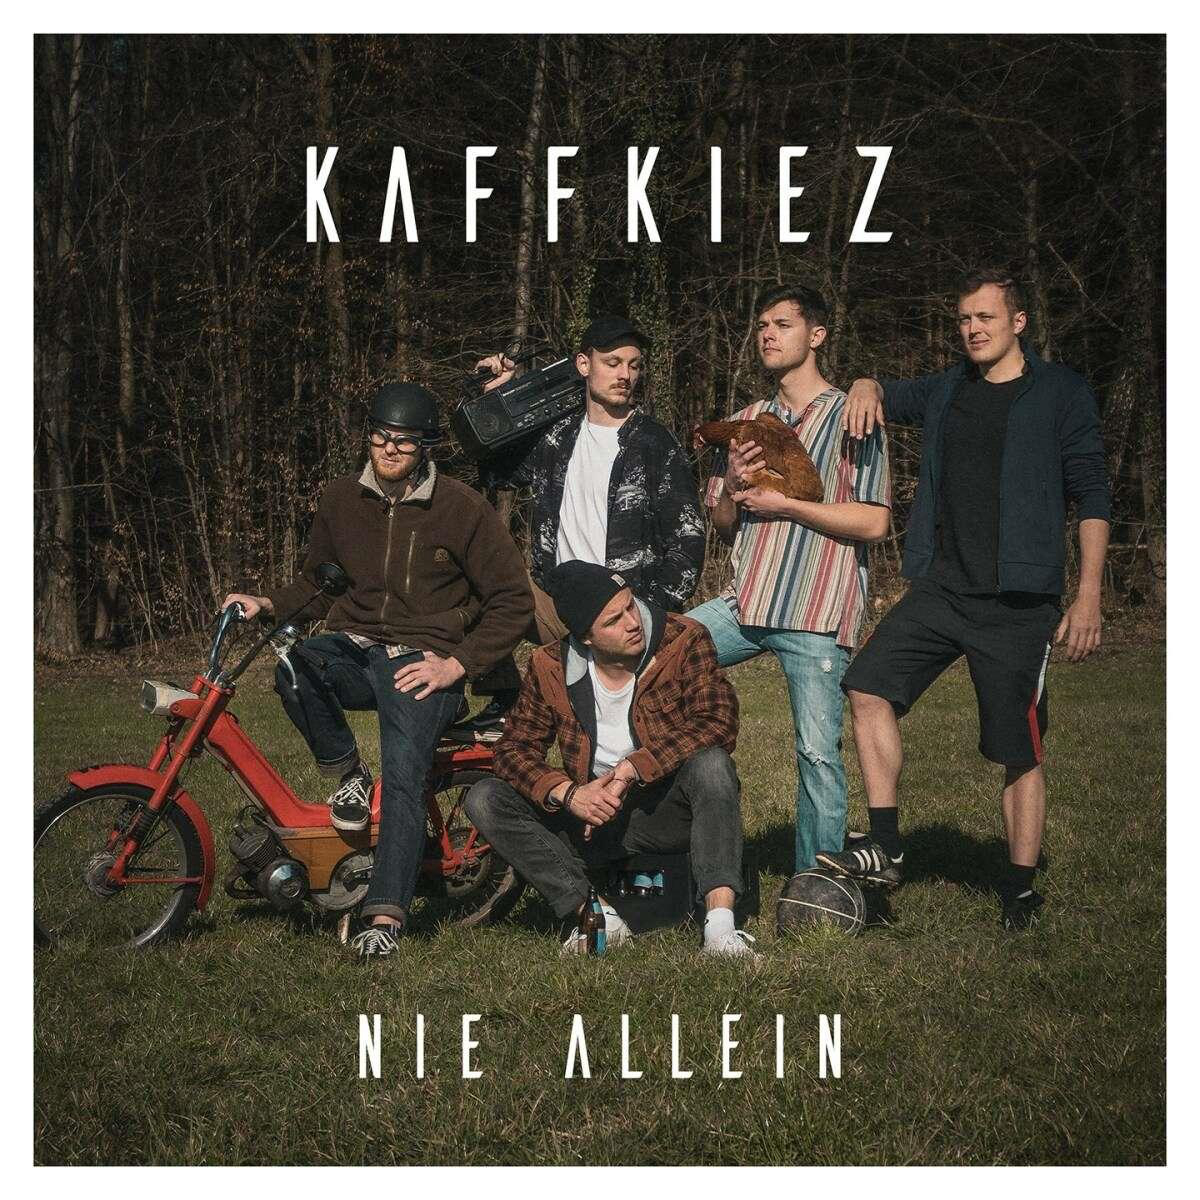 (Vinyl) Allein (Black Nie - - Vinyl) Kaffkiez